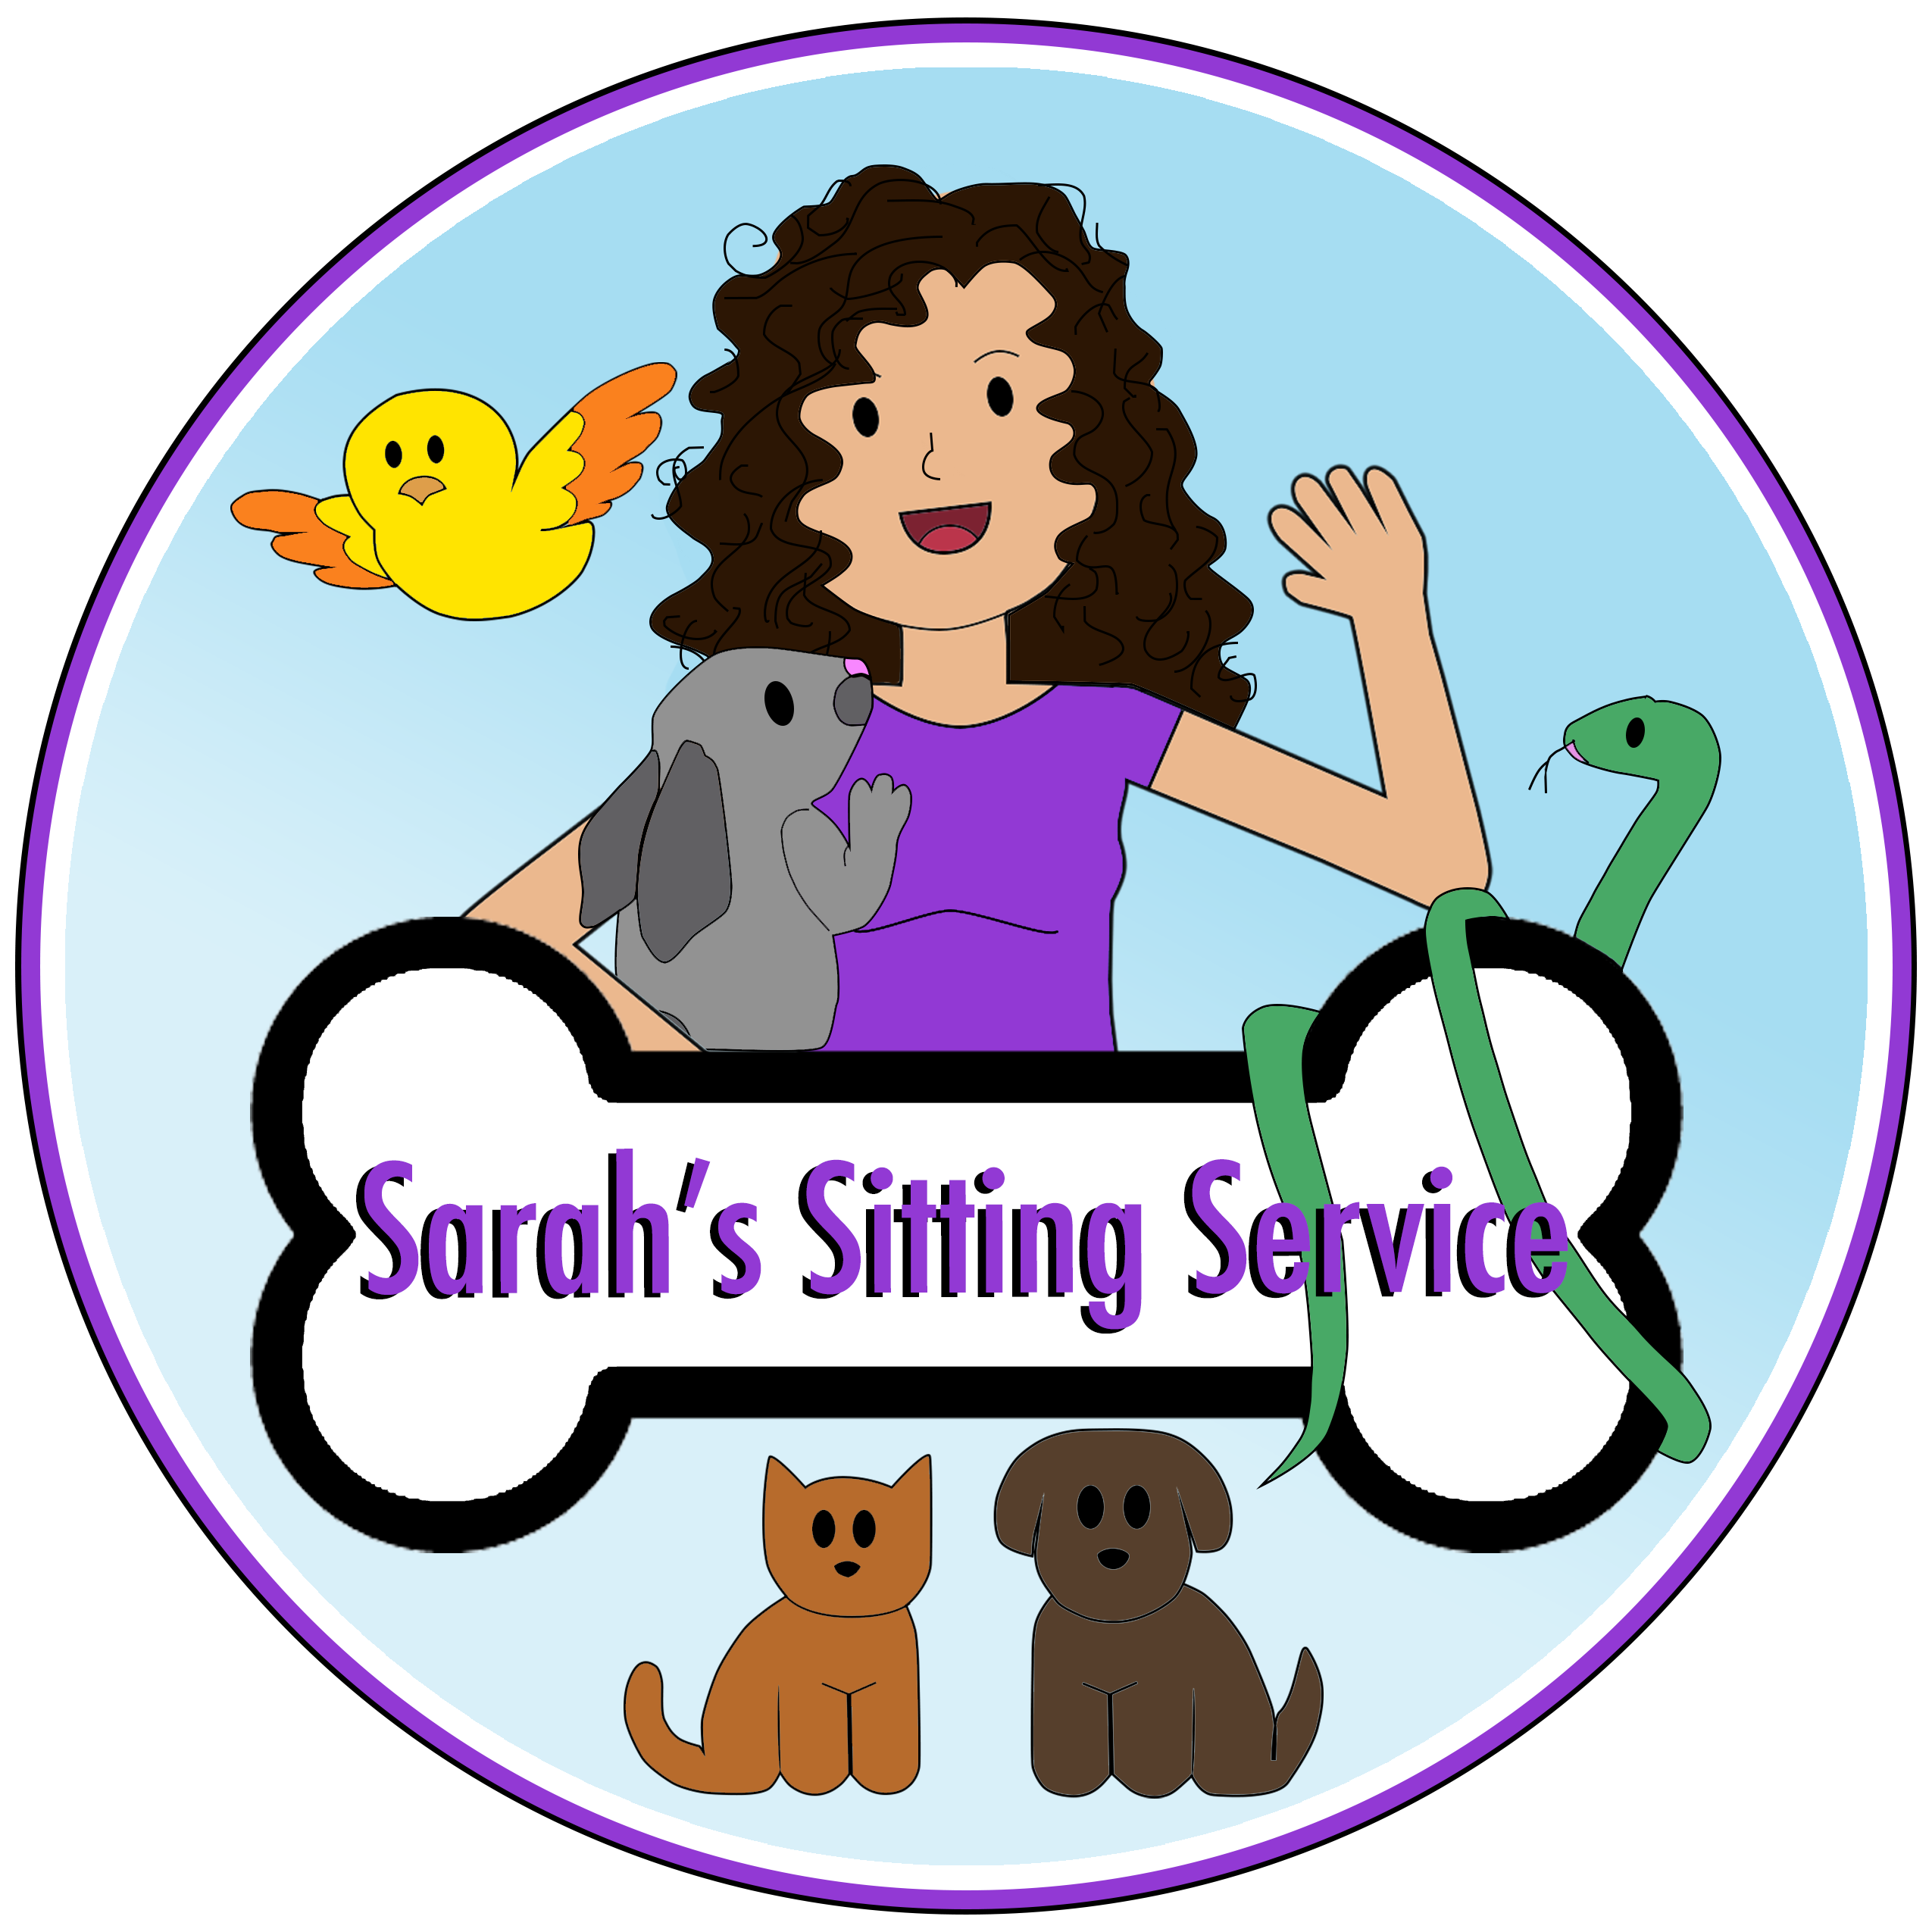 Sarah's Sitting Service LLC